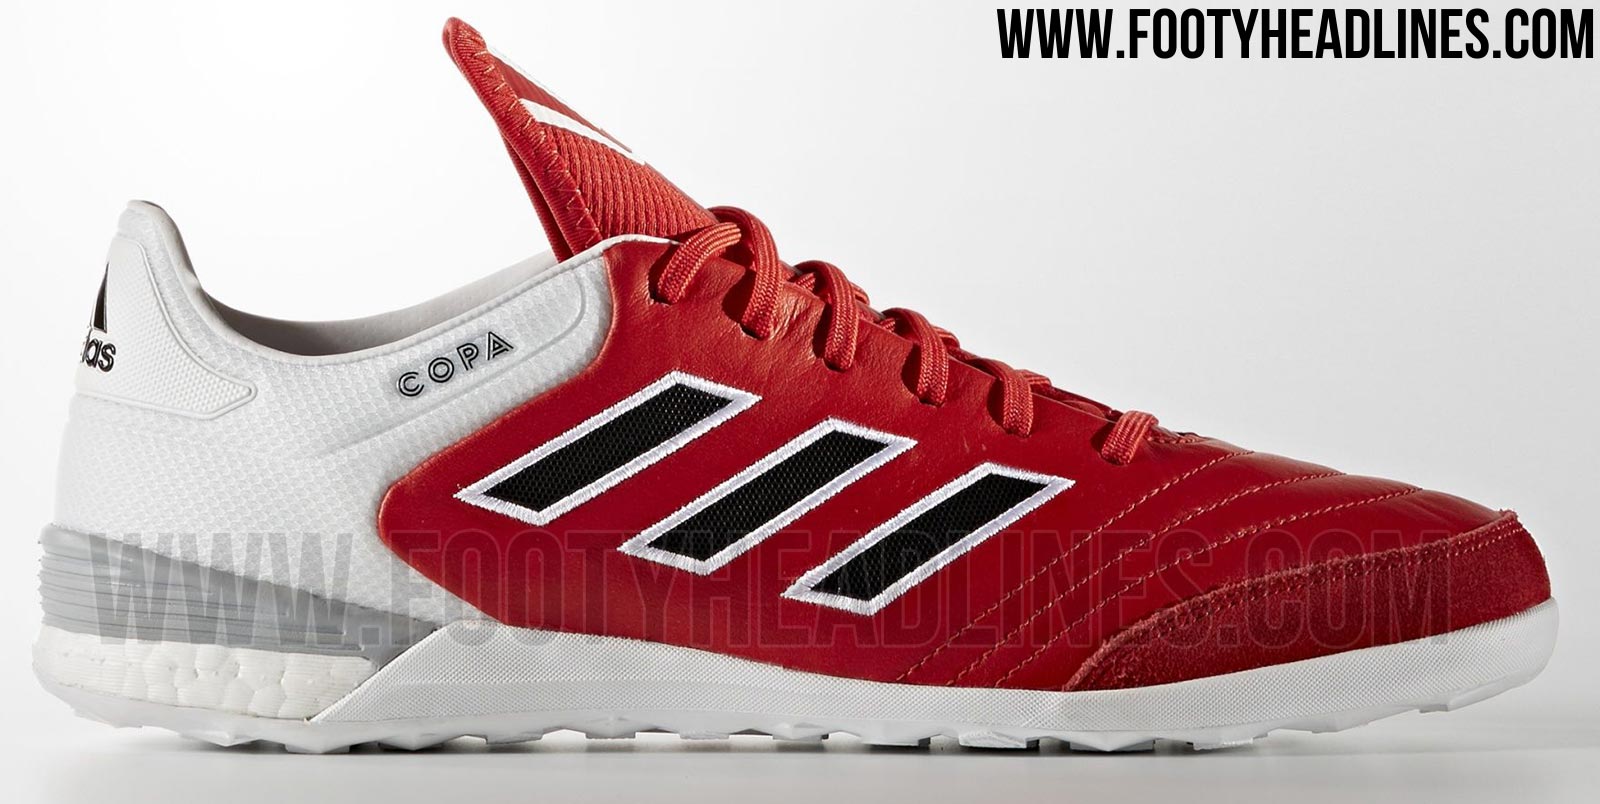 Adidas Copa Tango 17 Indoor Turf Boots Released - Footy Headlines